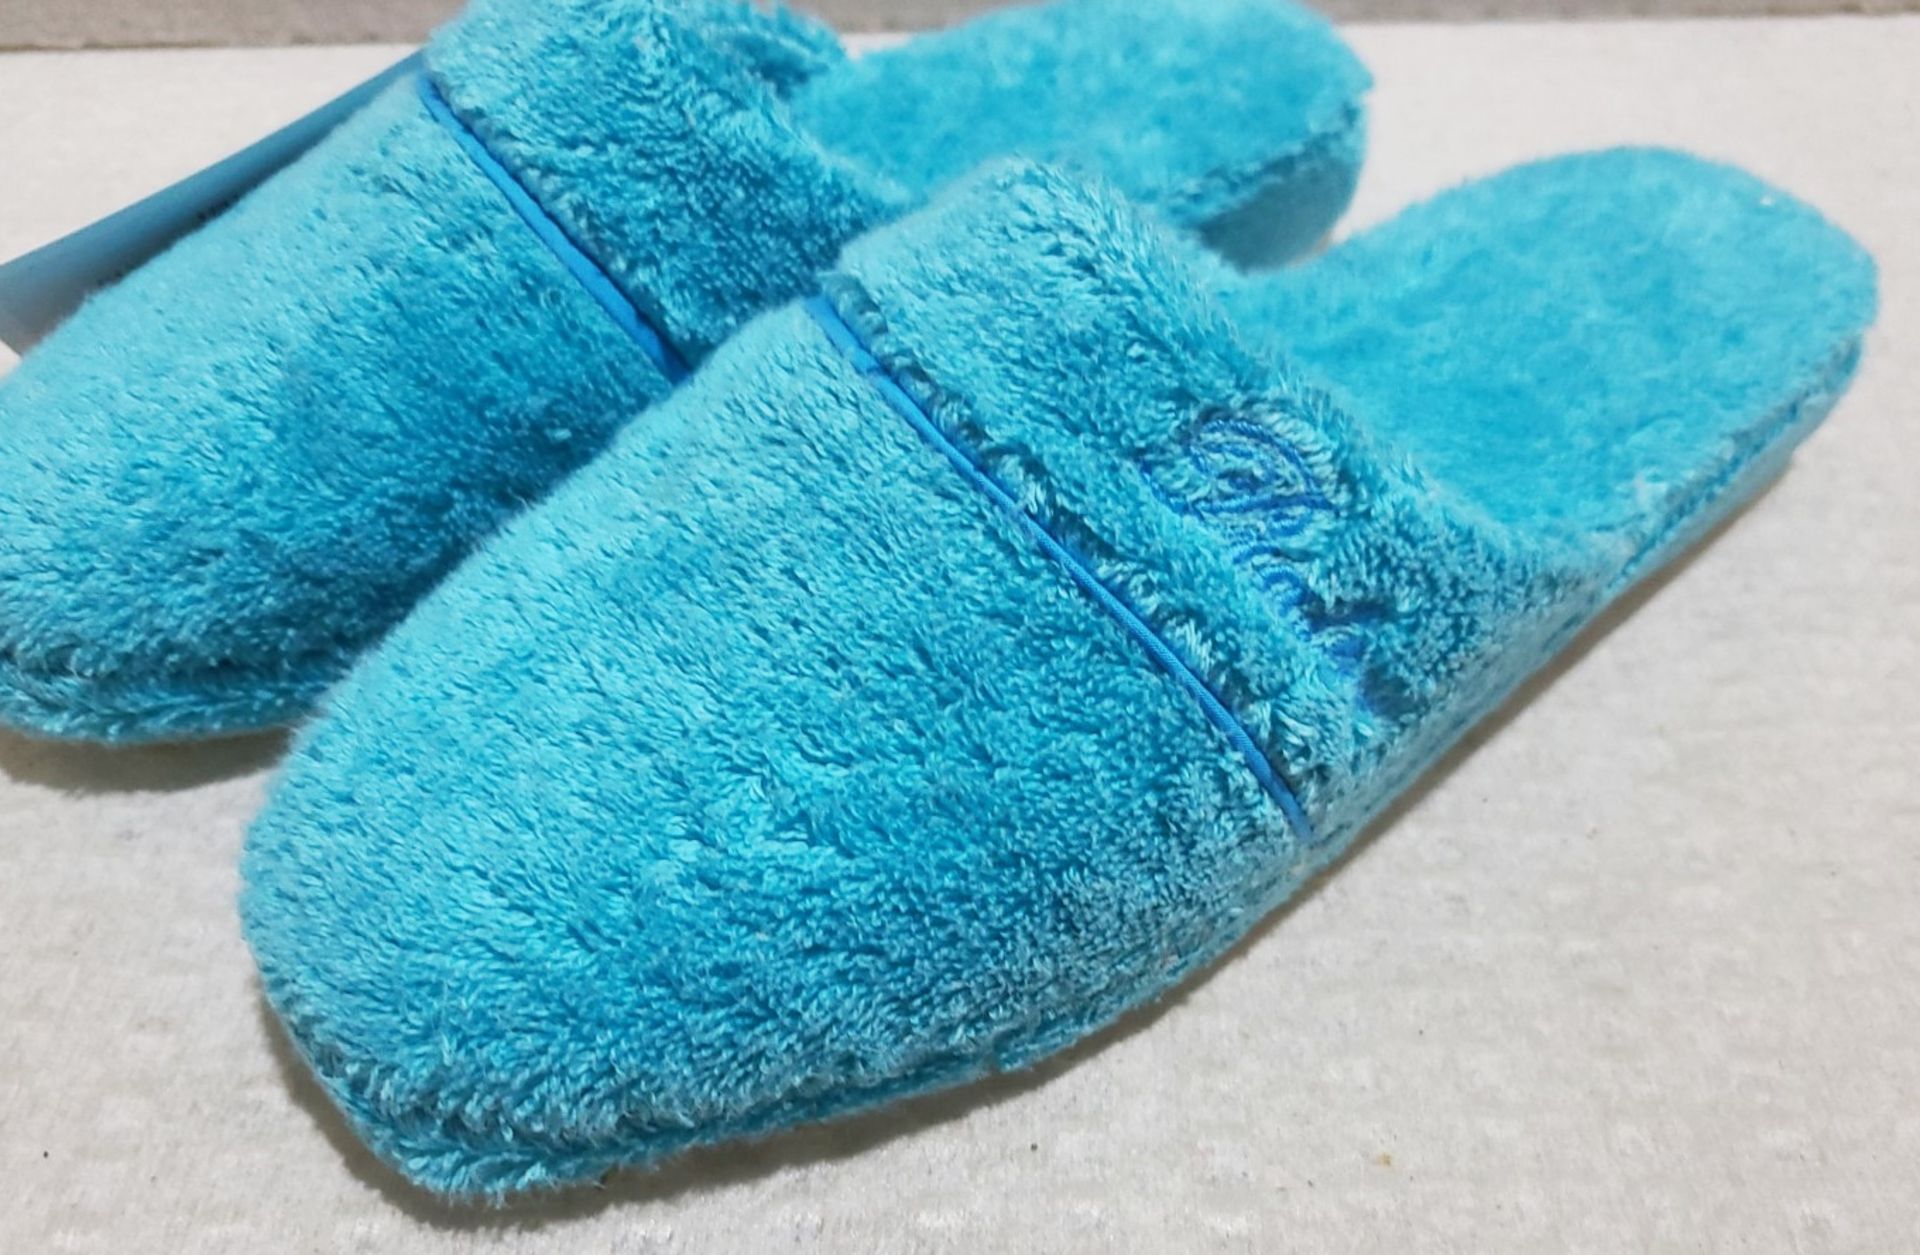 1 x PRATESI Panofole Turquoise Terry Cotton Slippers Size 38/39 - Original Price £200.00 - Image 4 of 4